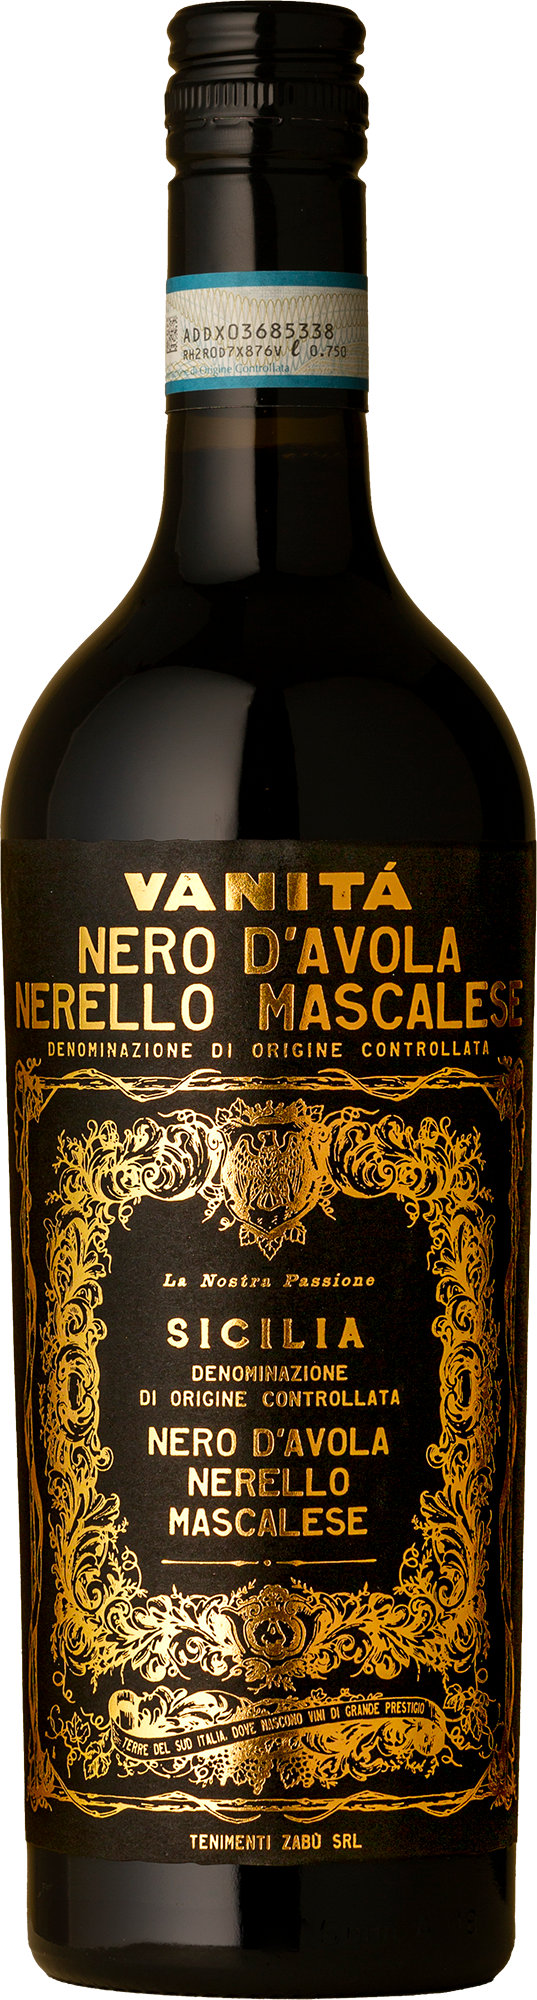 Vanita - Gold Label Nerello Mascalese / Nero d'Avola 2020 Red Wine